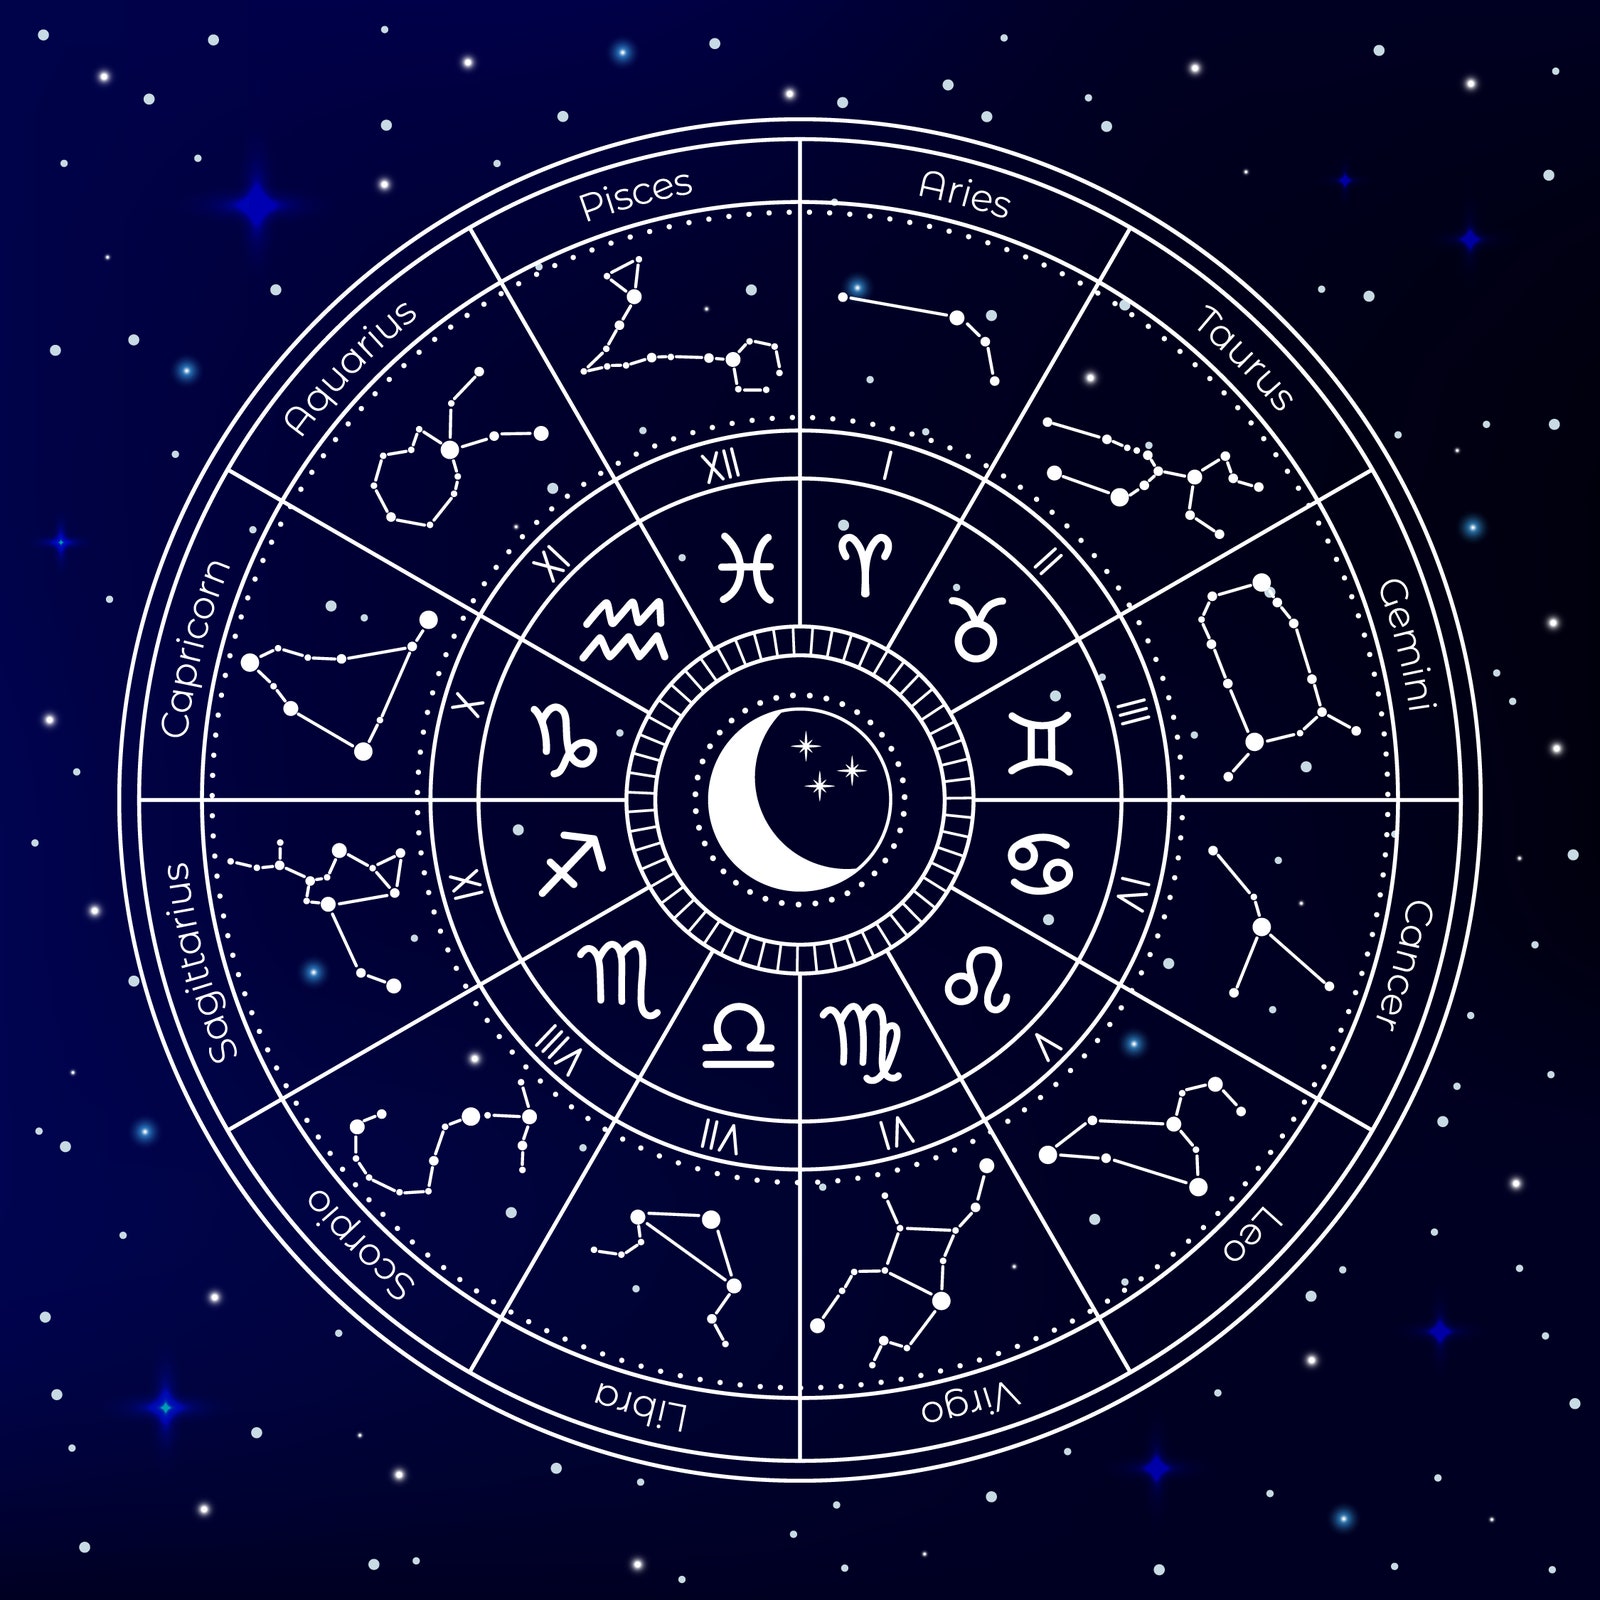 Do you believe in astrology?